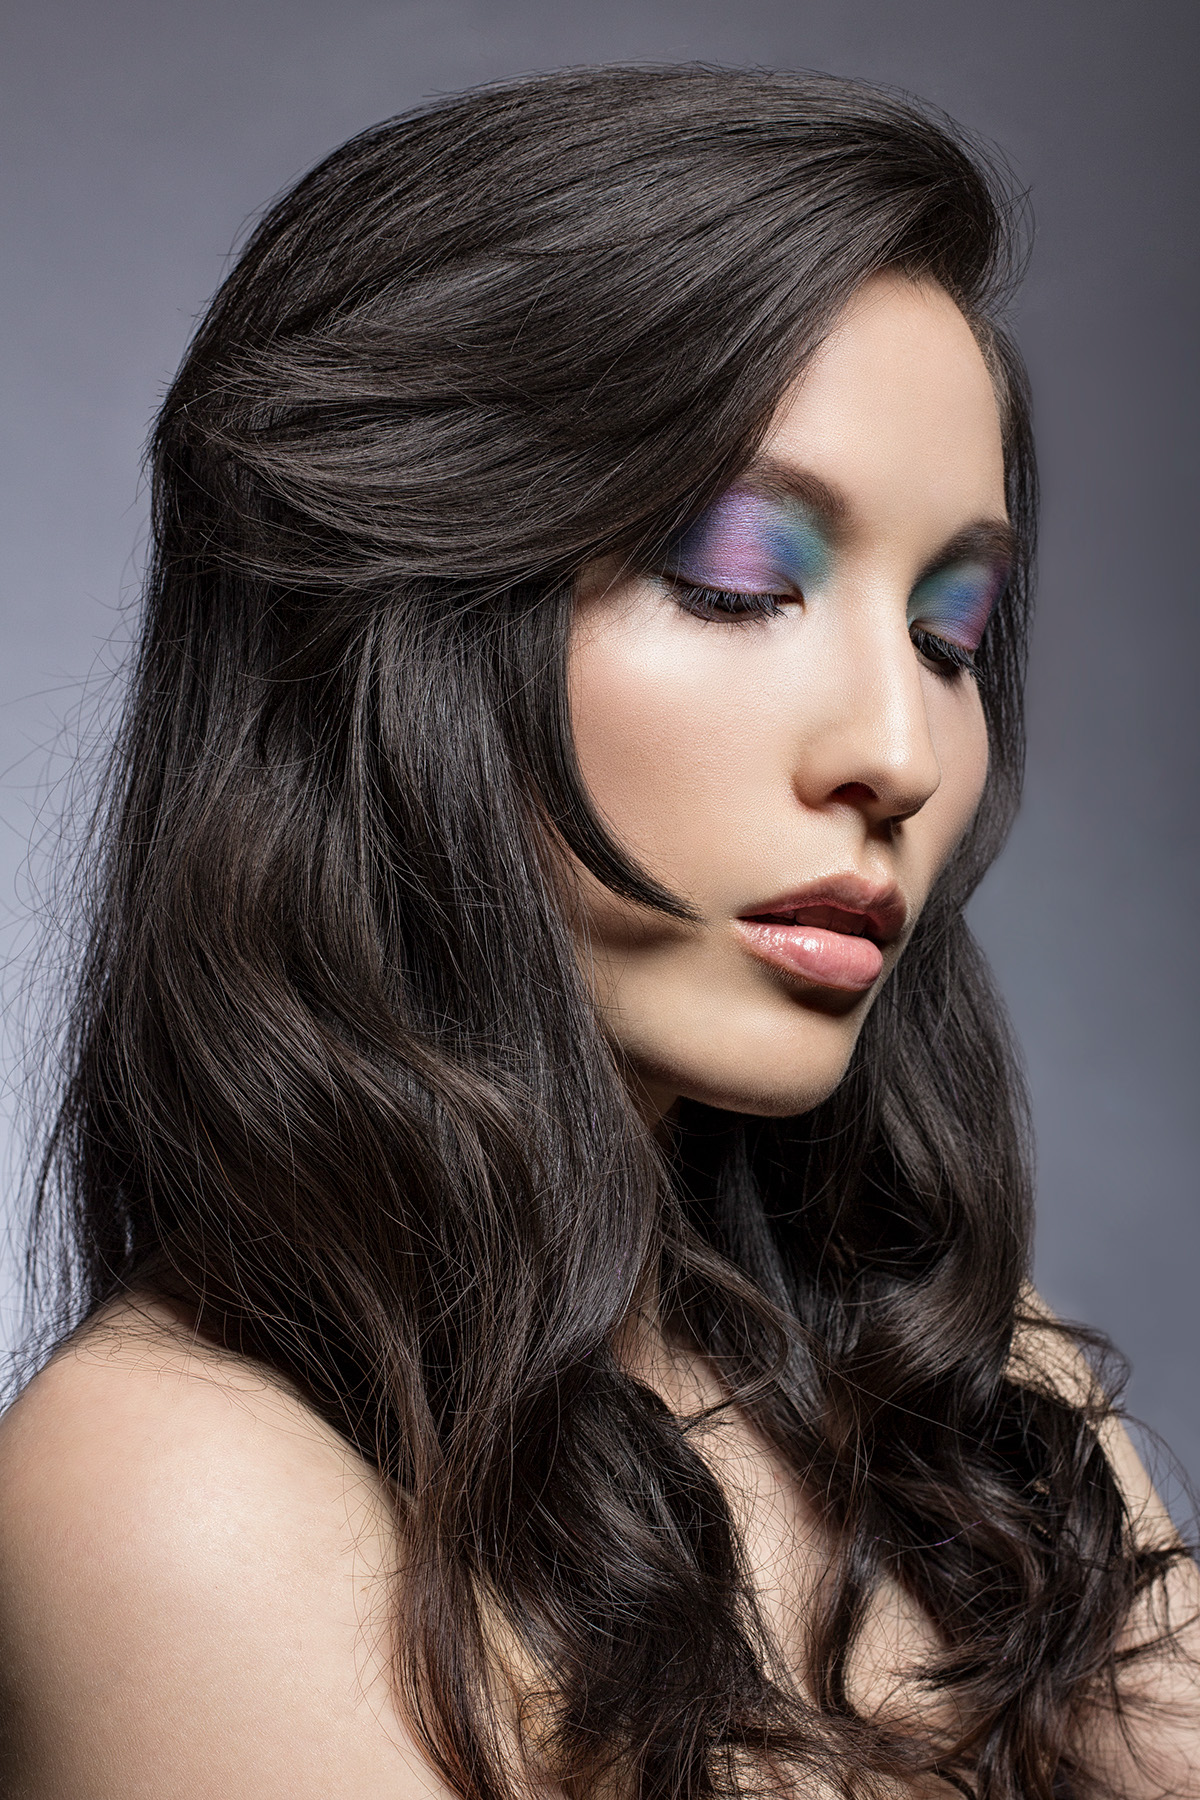 natacha meunier beauty hair girl editorial model makeup toni & guy monochrome black & white Classic French chinese eurasian